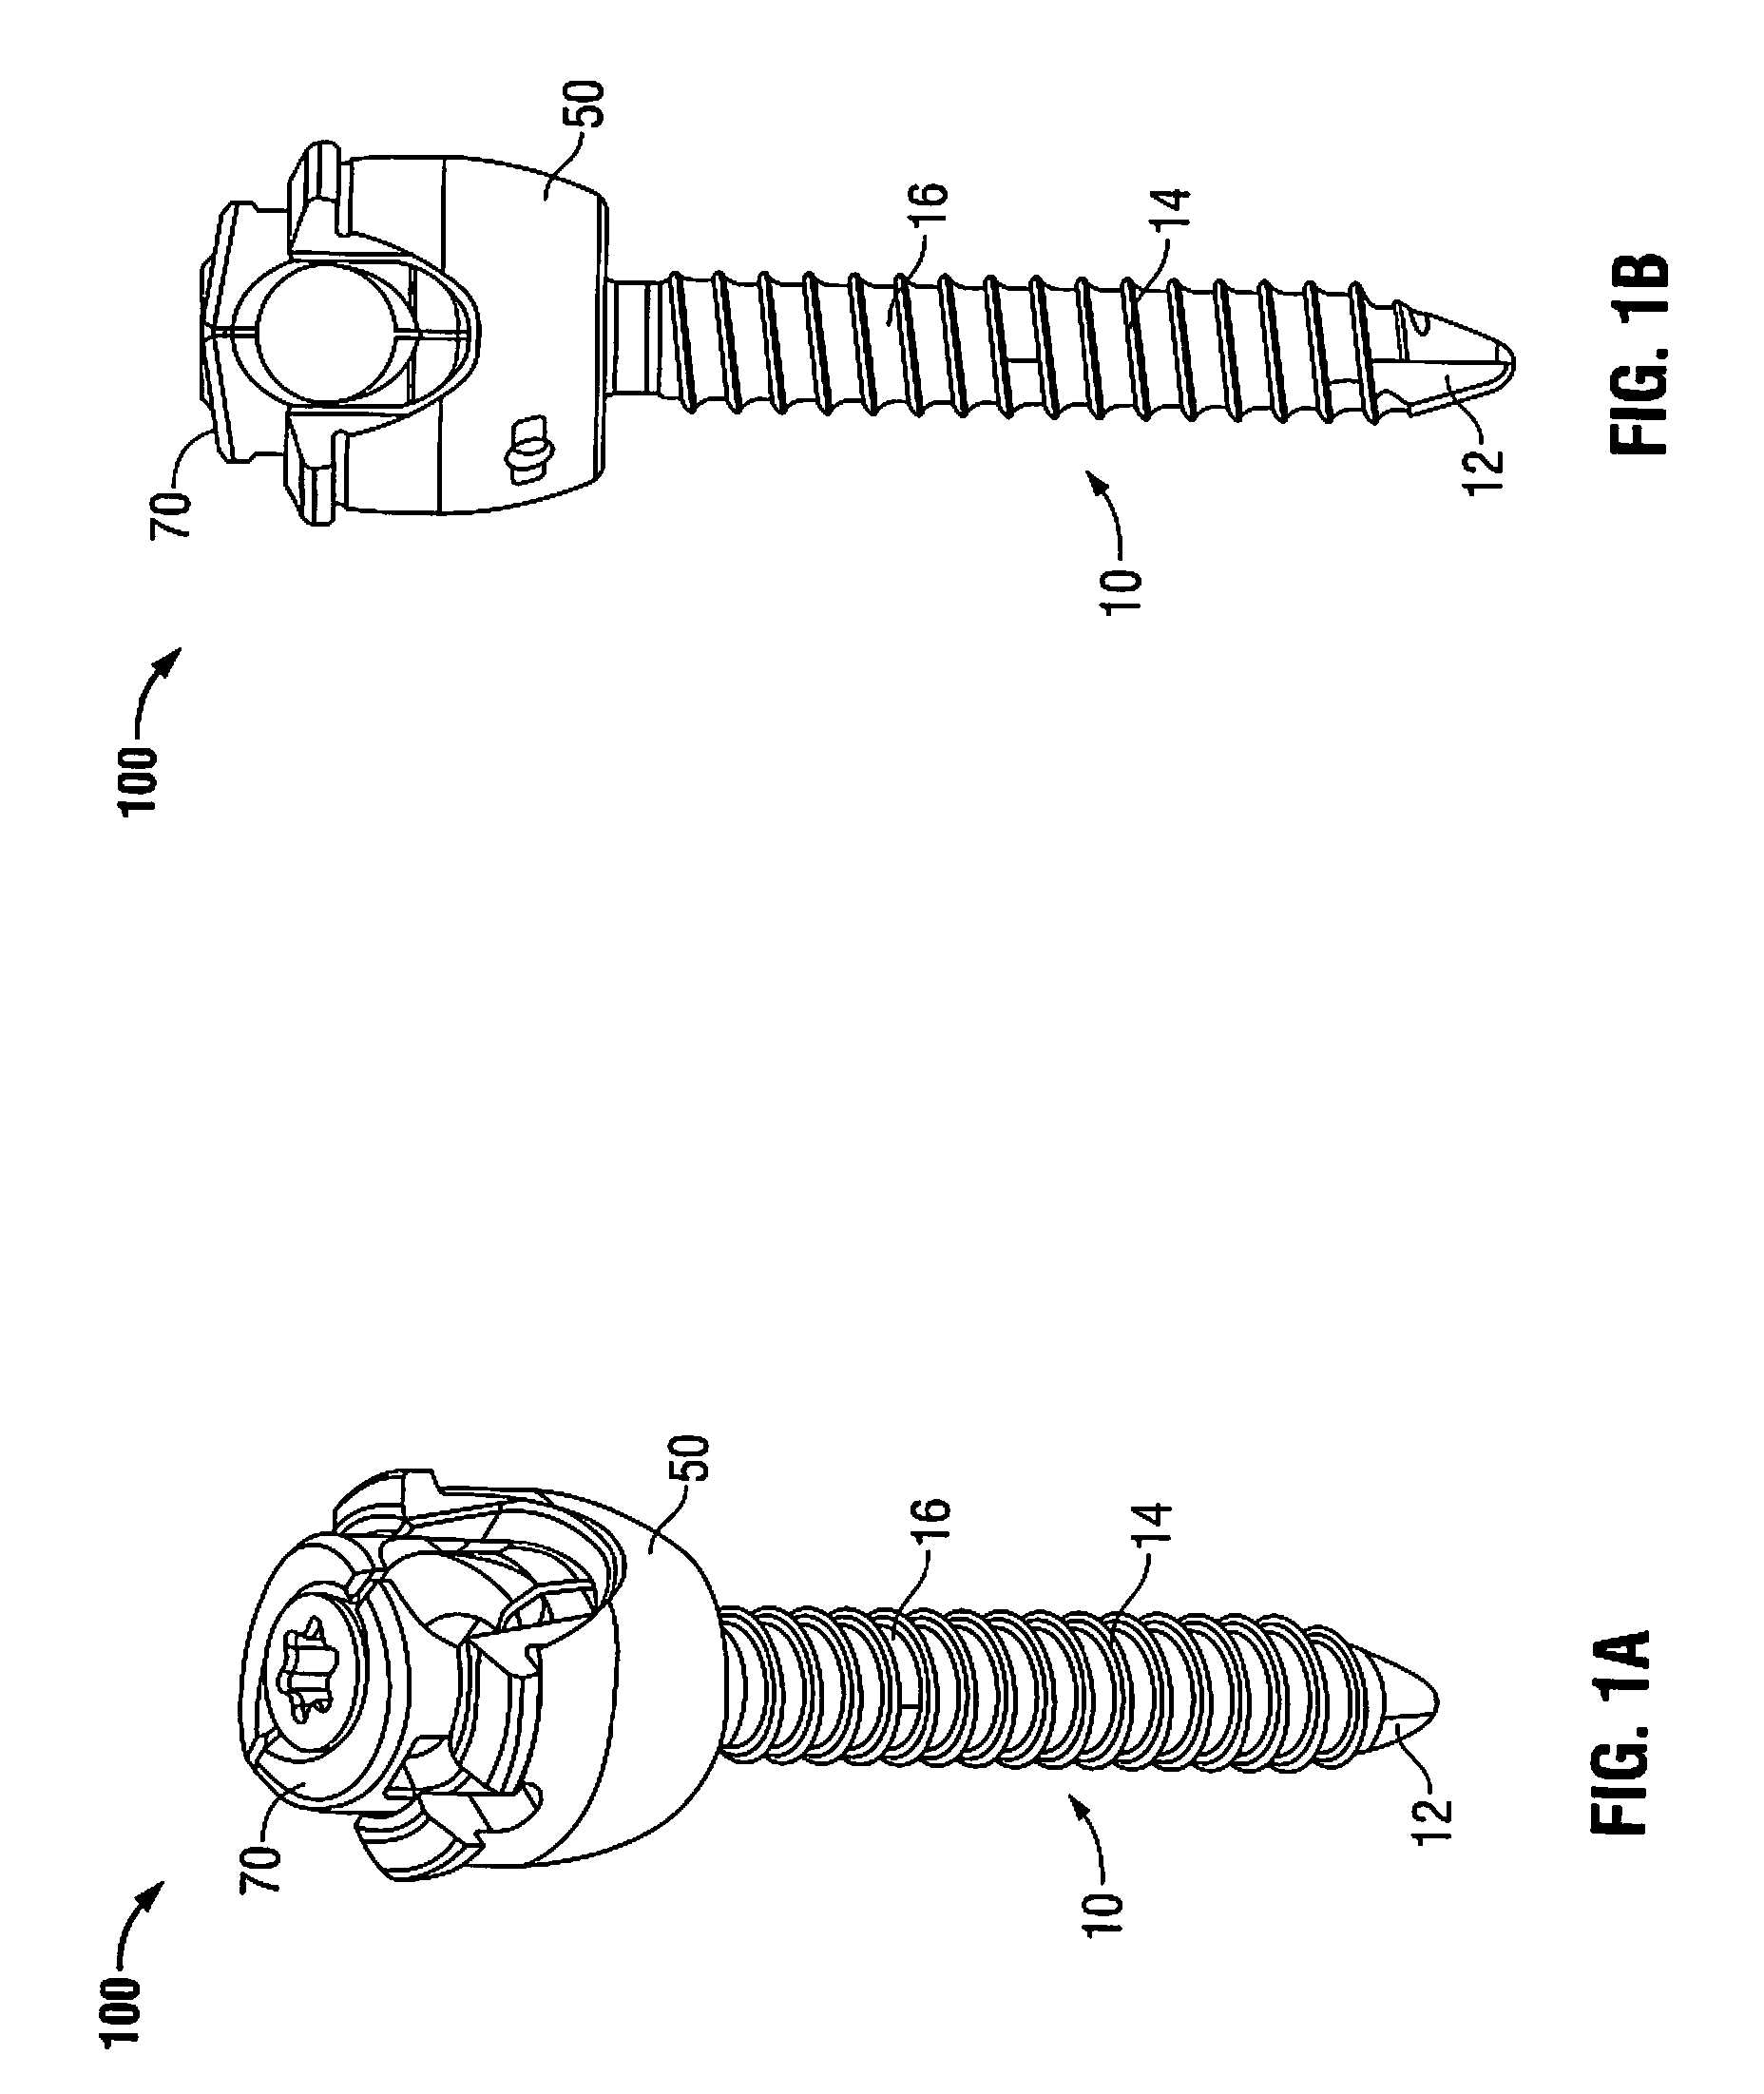 Multi-planar, taper lock screw with additional lock